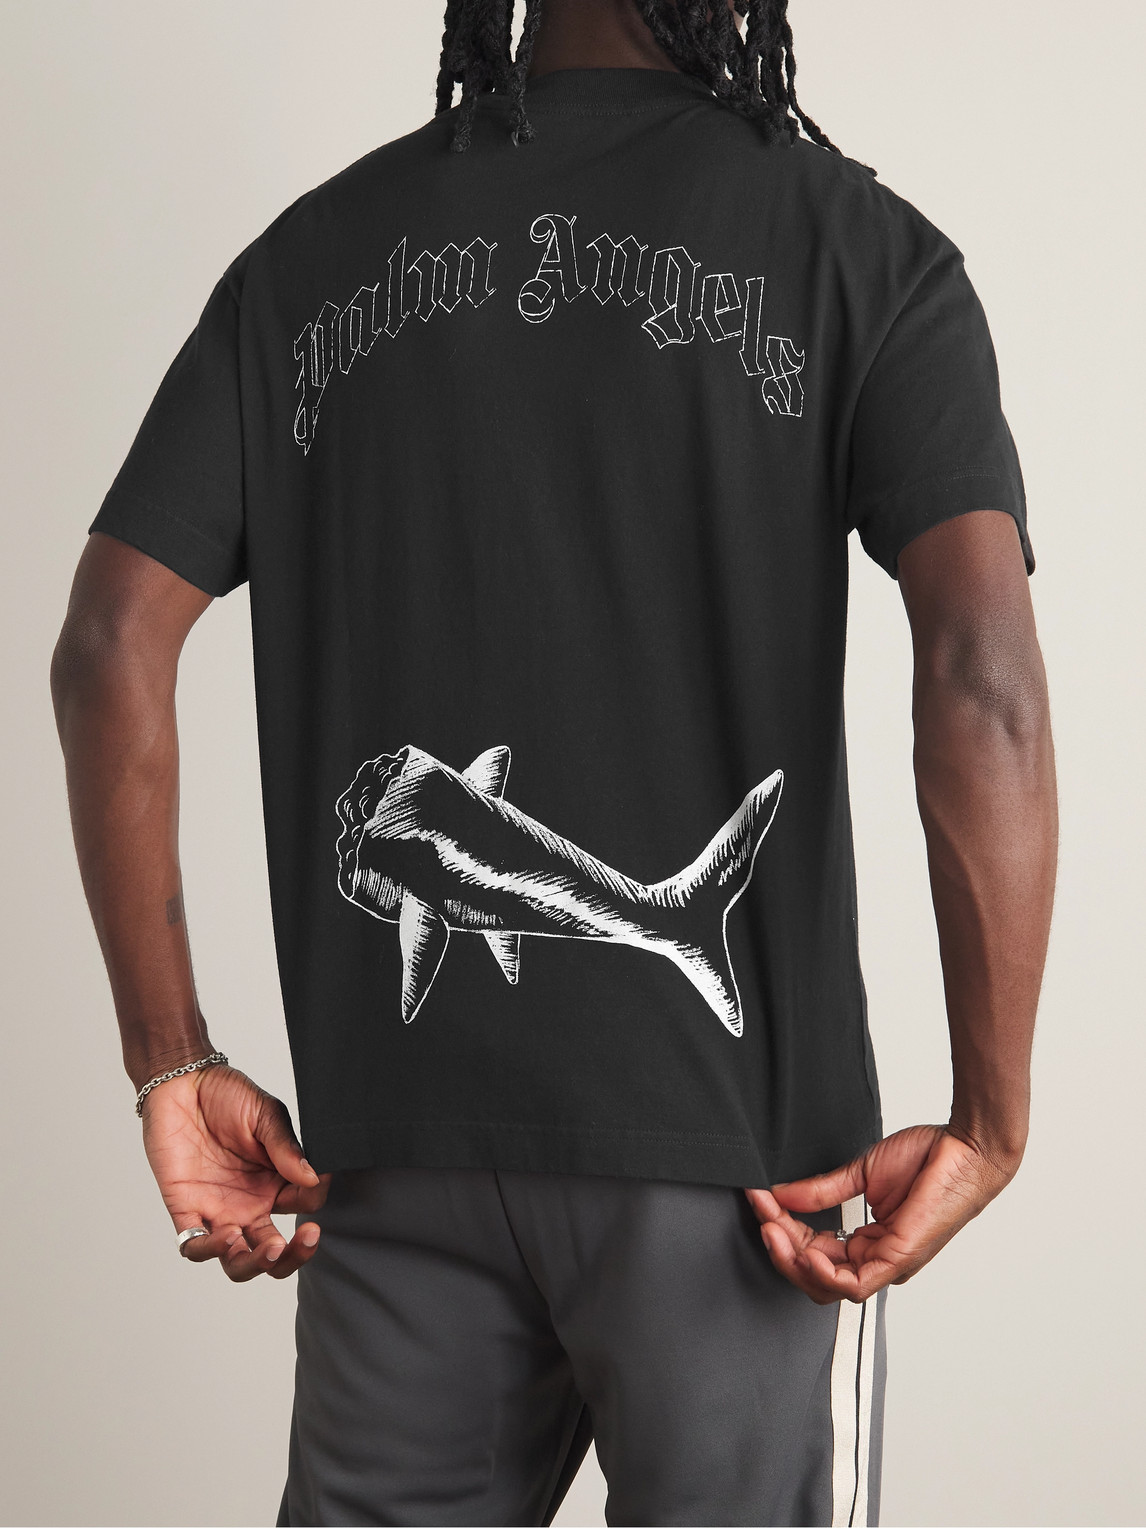 Palm Angels Shark-print Organic Cotton T-shirt - Farfetch